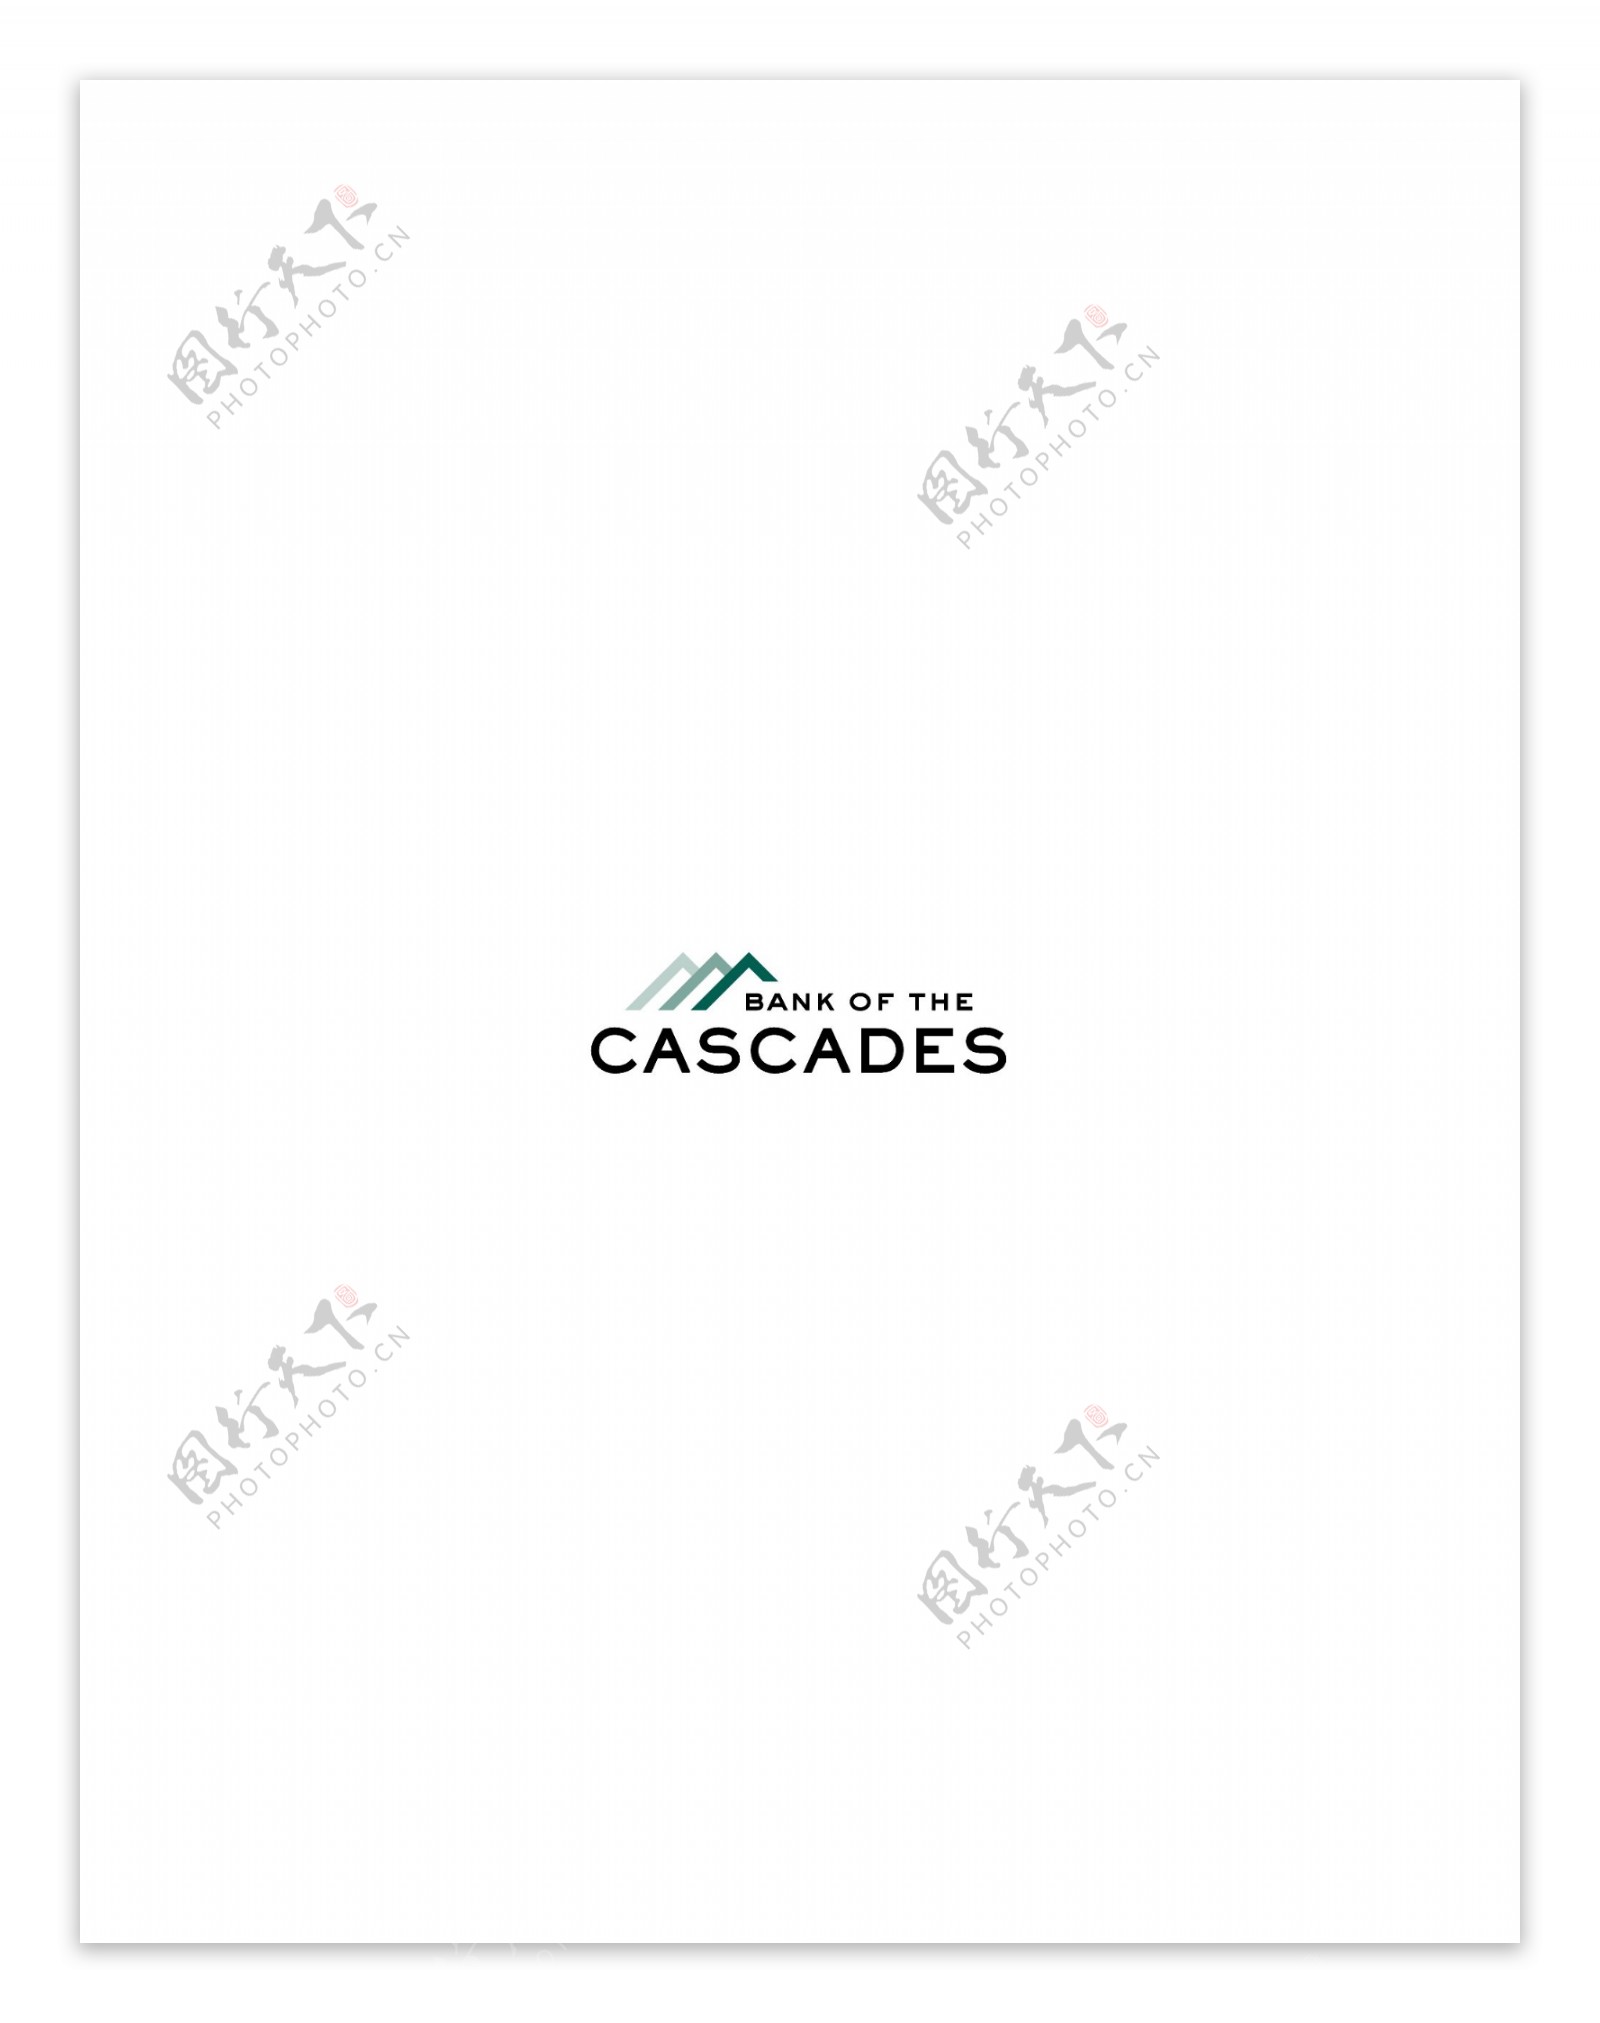 BankoftheCascadeslogo设计欣赏BankoftheCascades信用卡标志下载标志设计欣赏